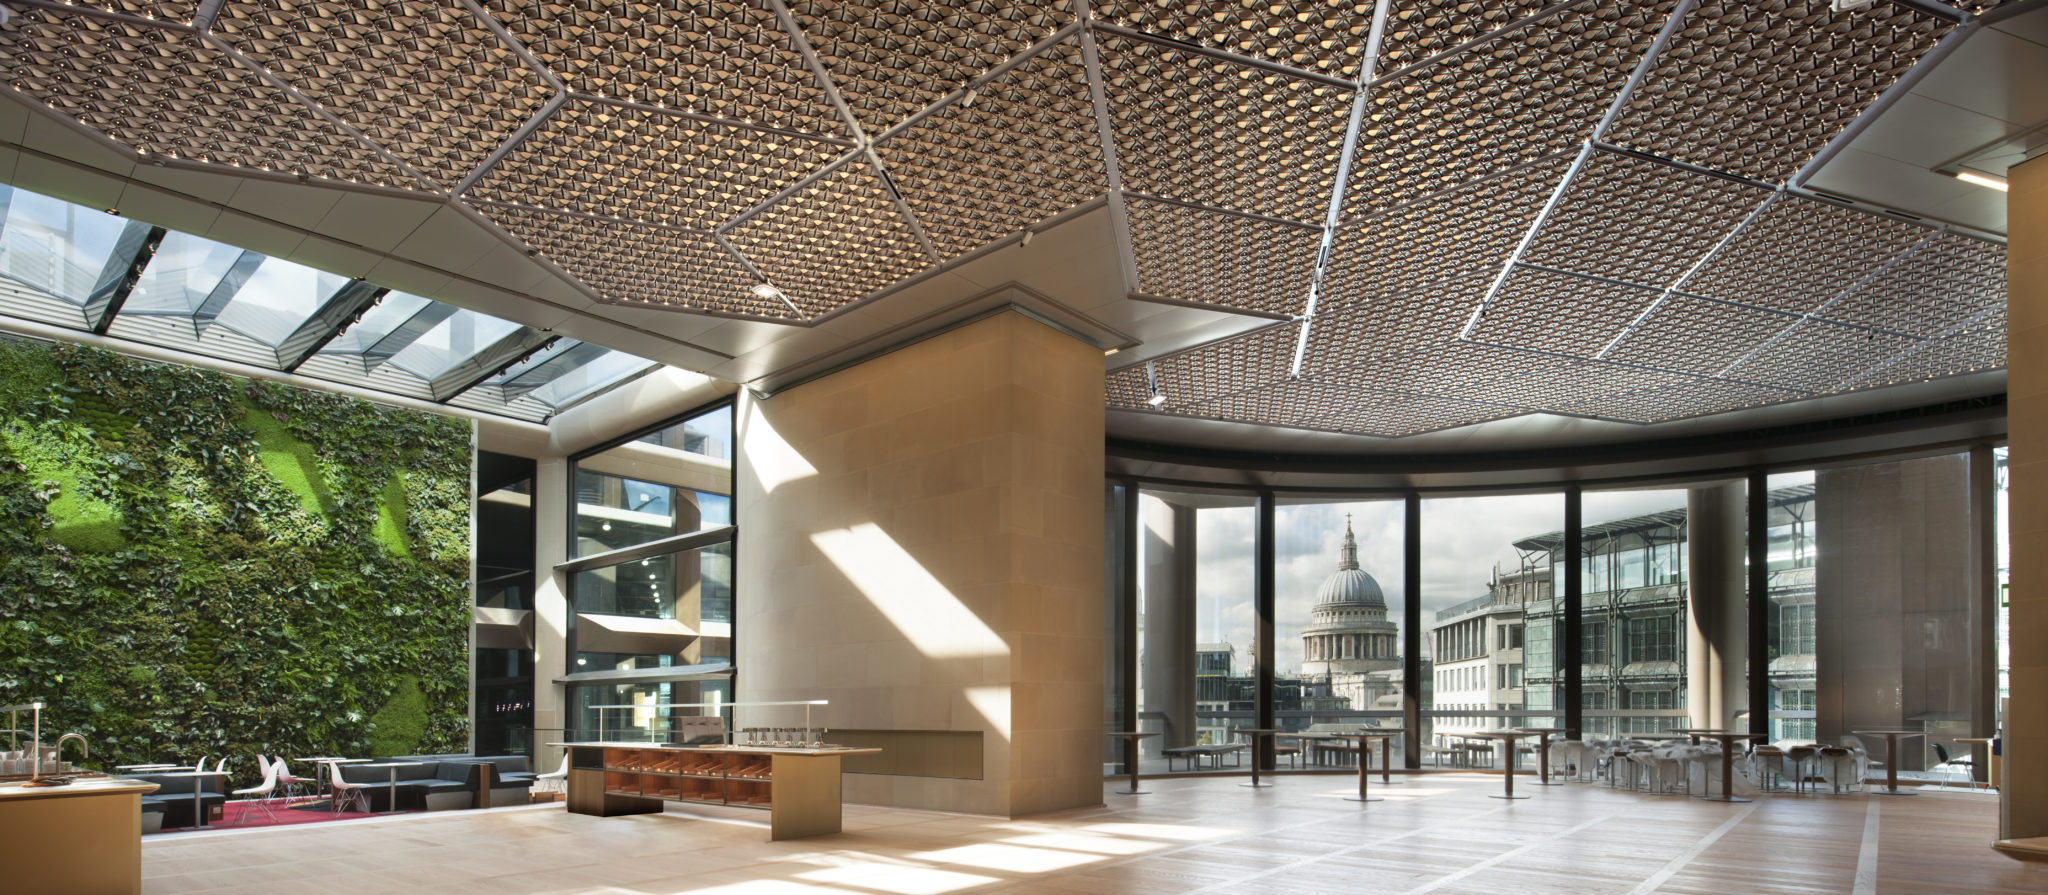 SAS ceiling enhances sustainability at Bloomberg HQ